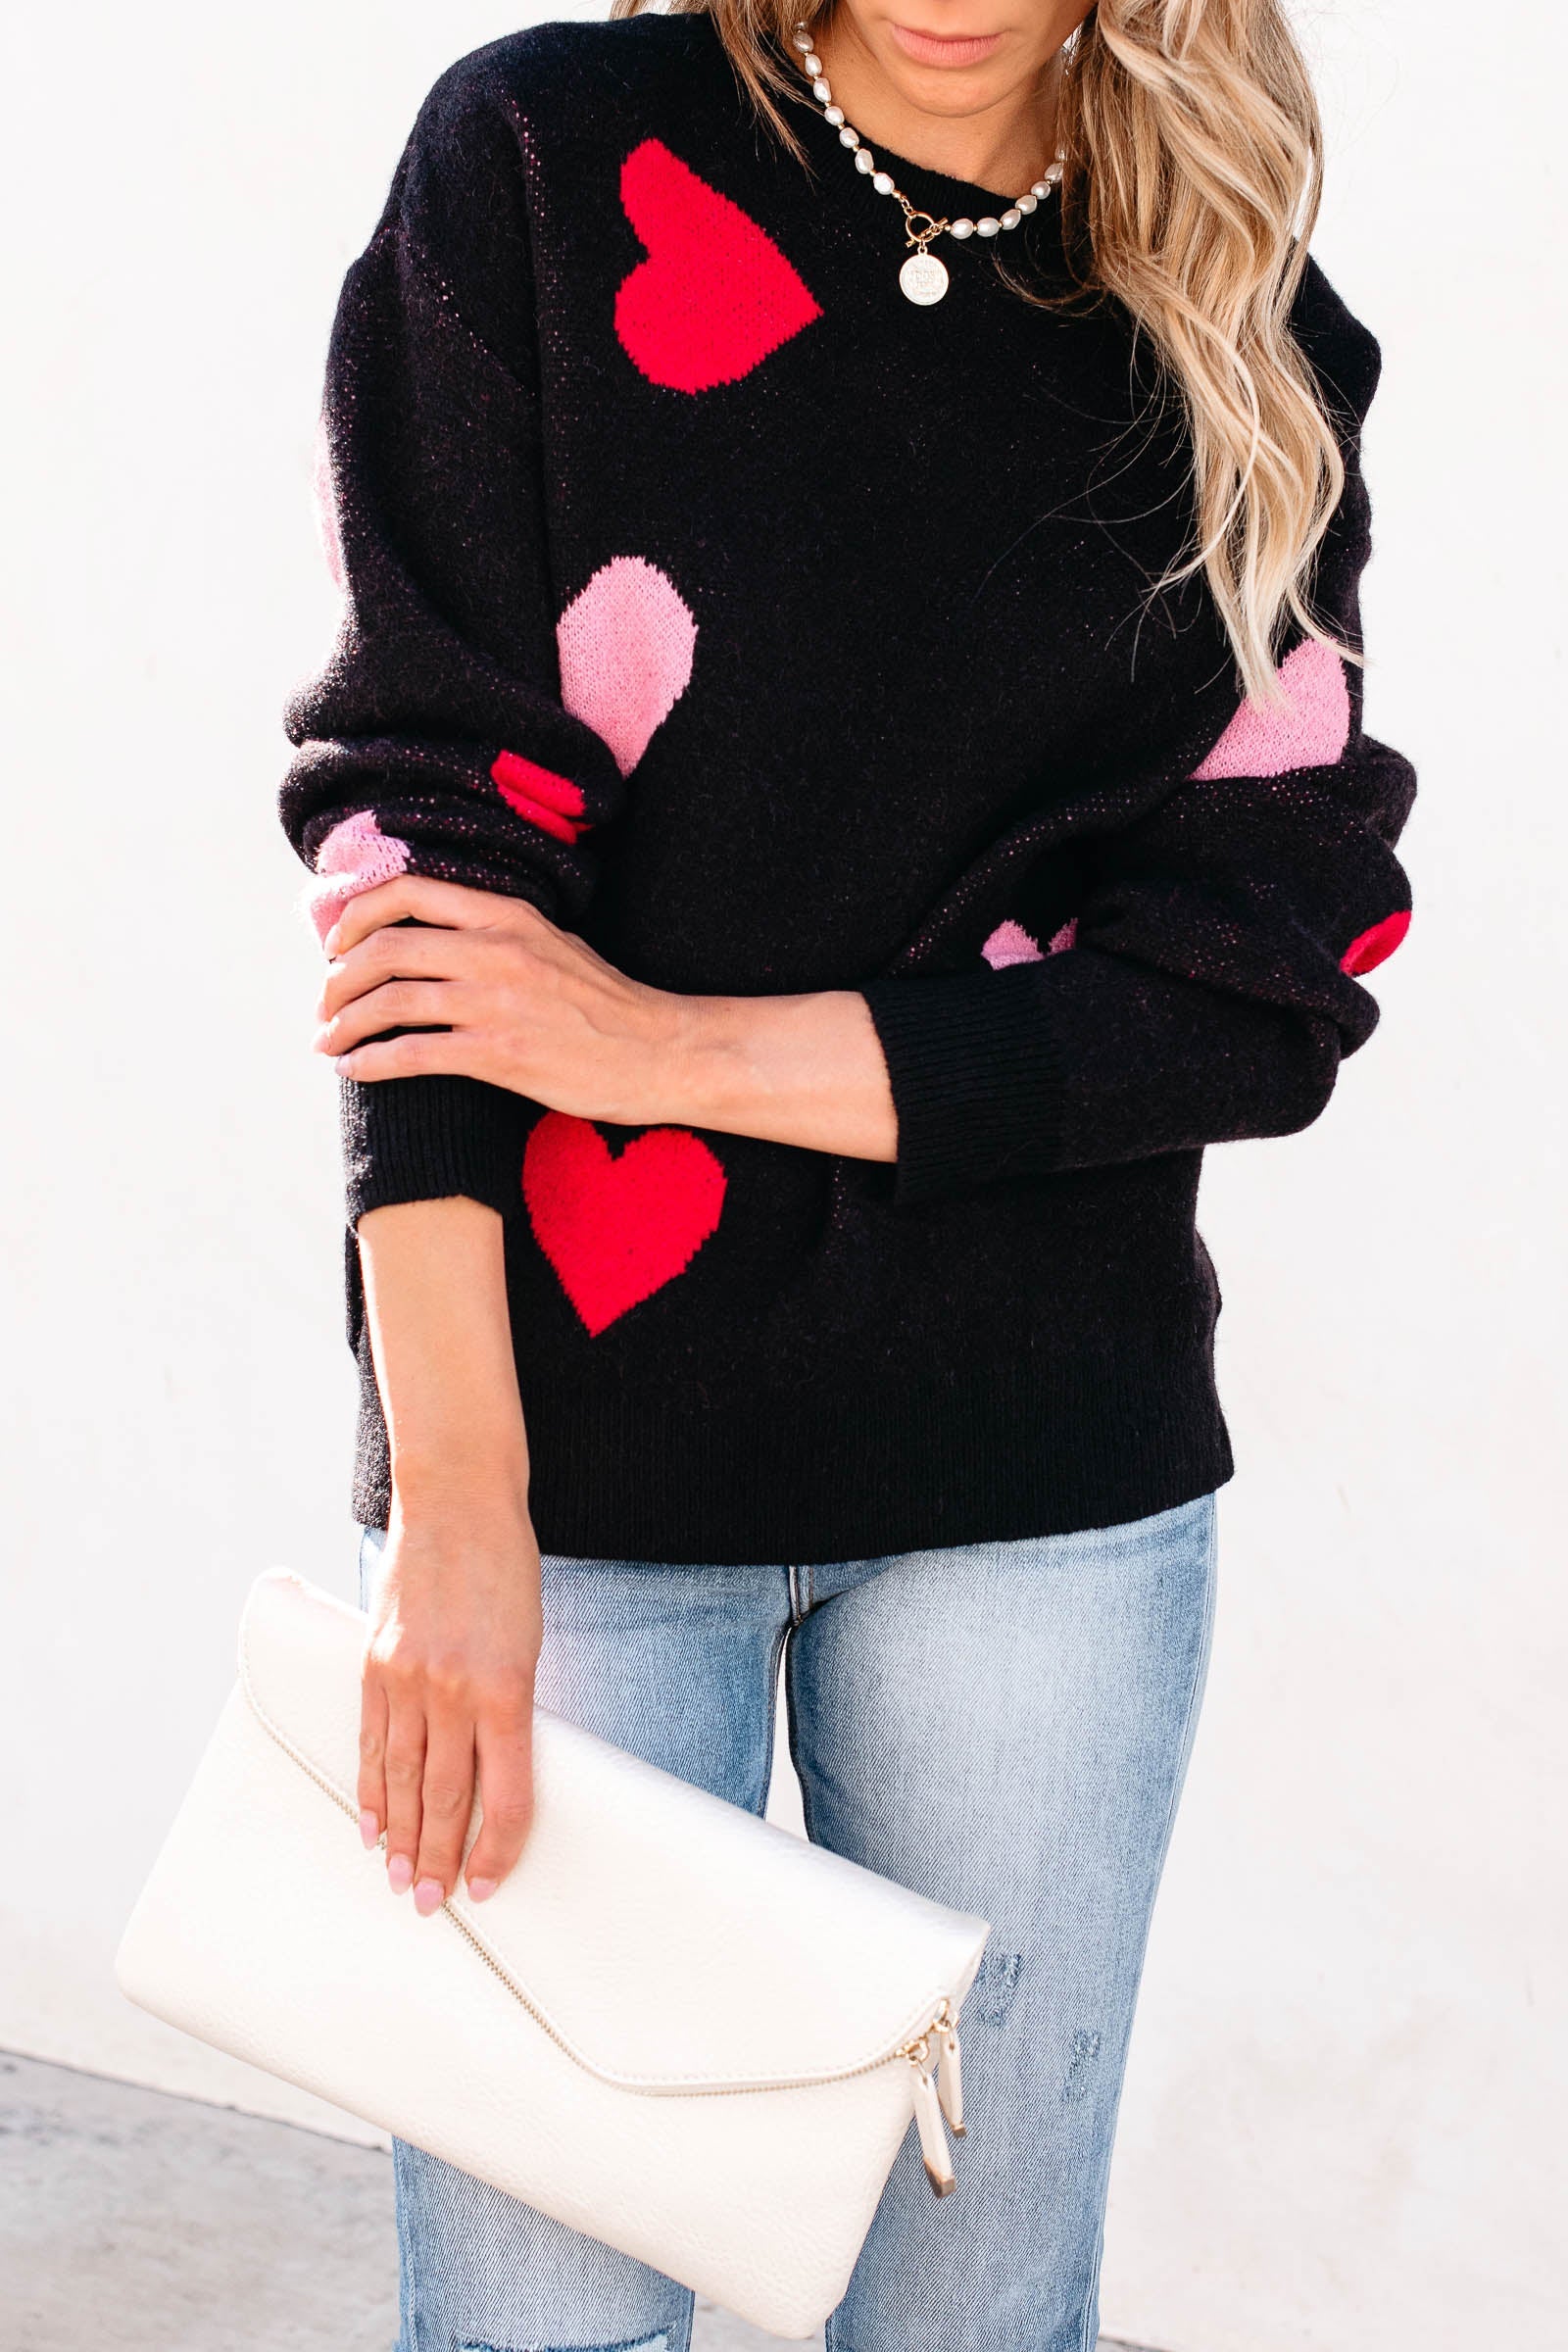 Bringing Back Love Sweater - Black, Closet Candy, 1